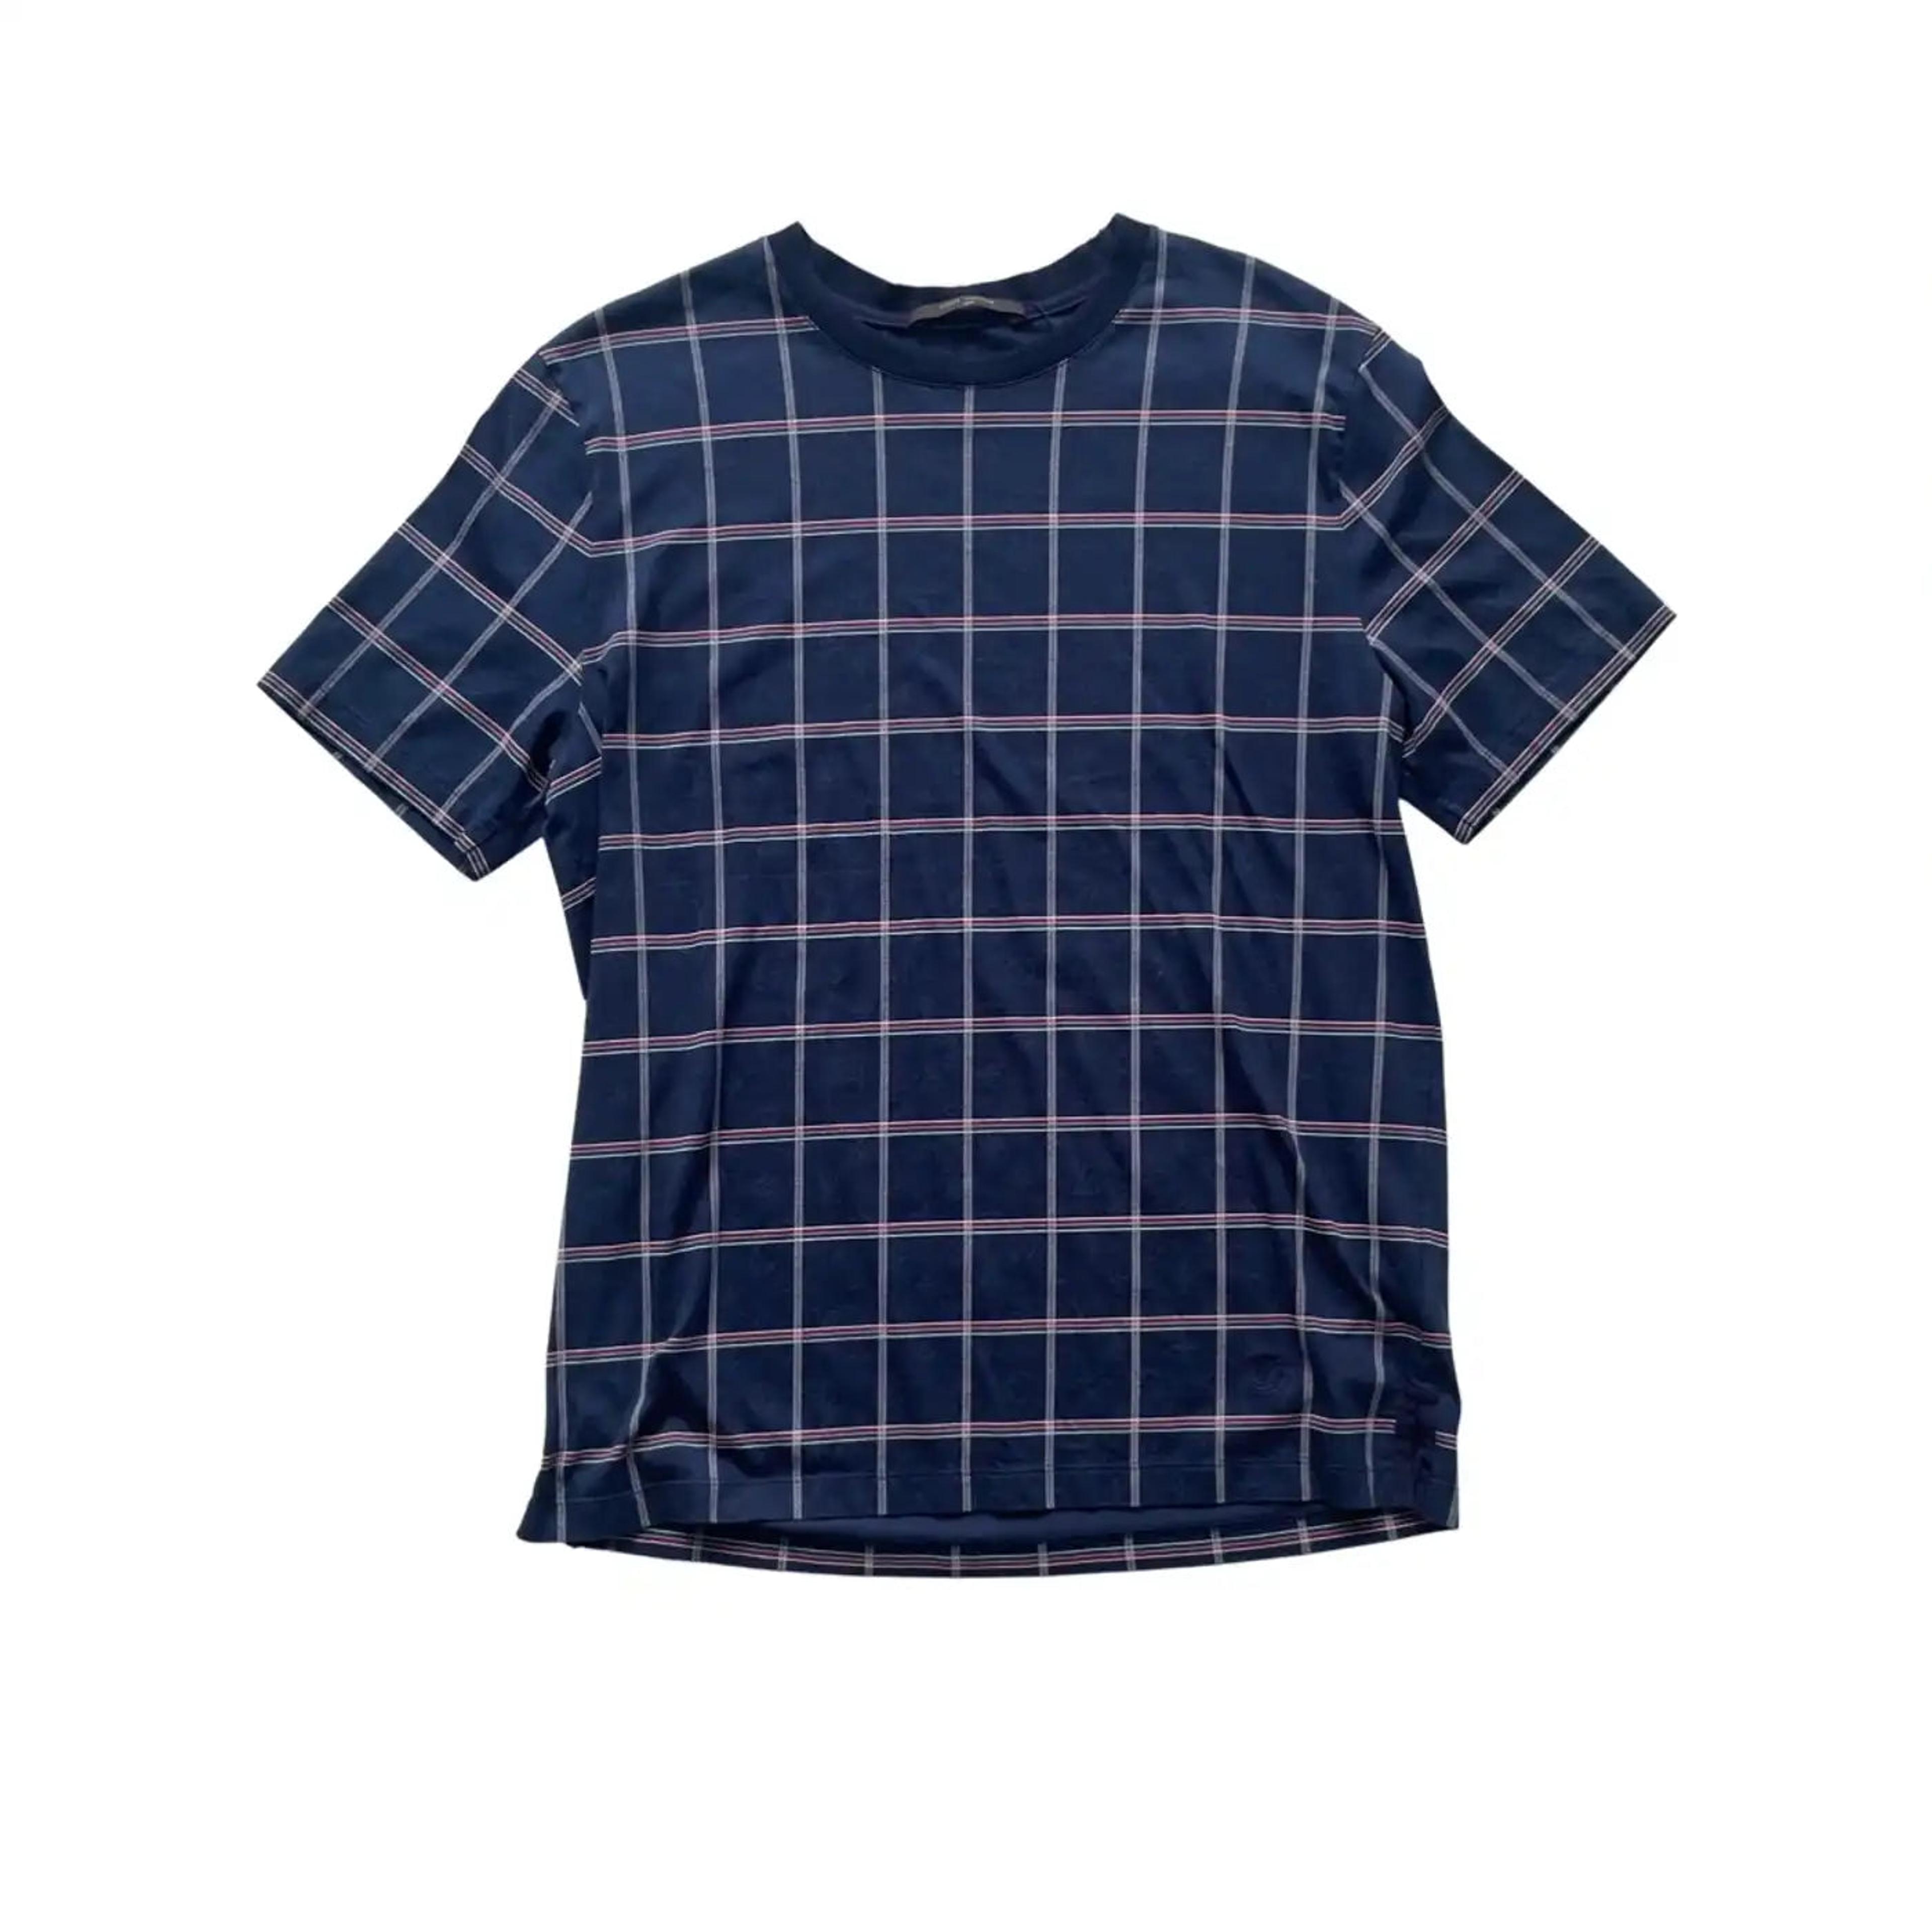 Louis Vuitton Kim Jones Mongram striped T-Shirt